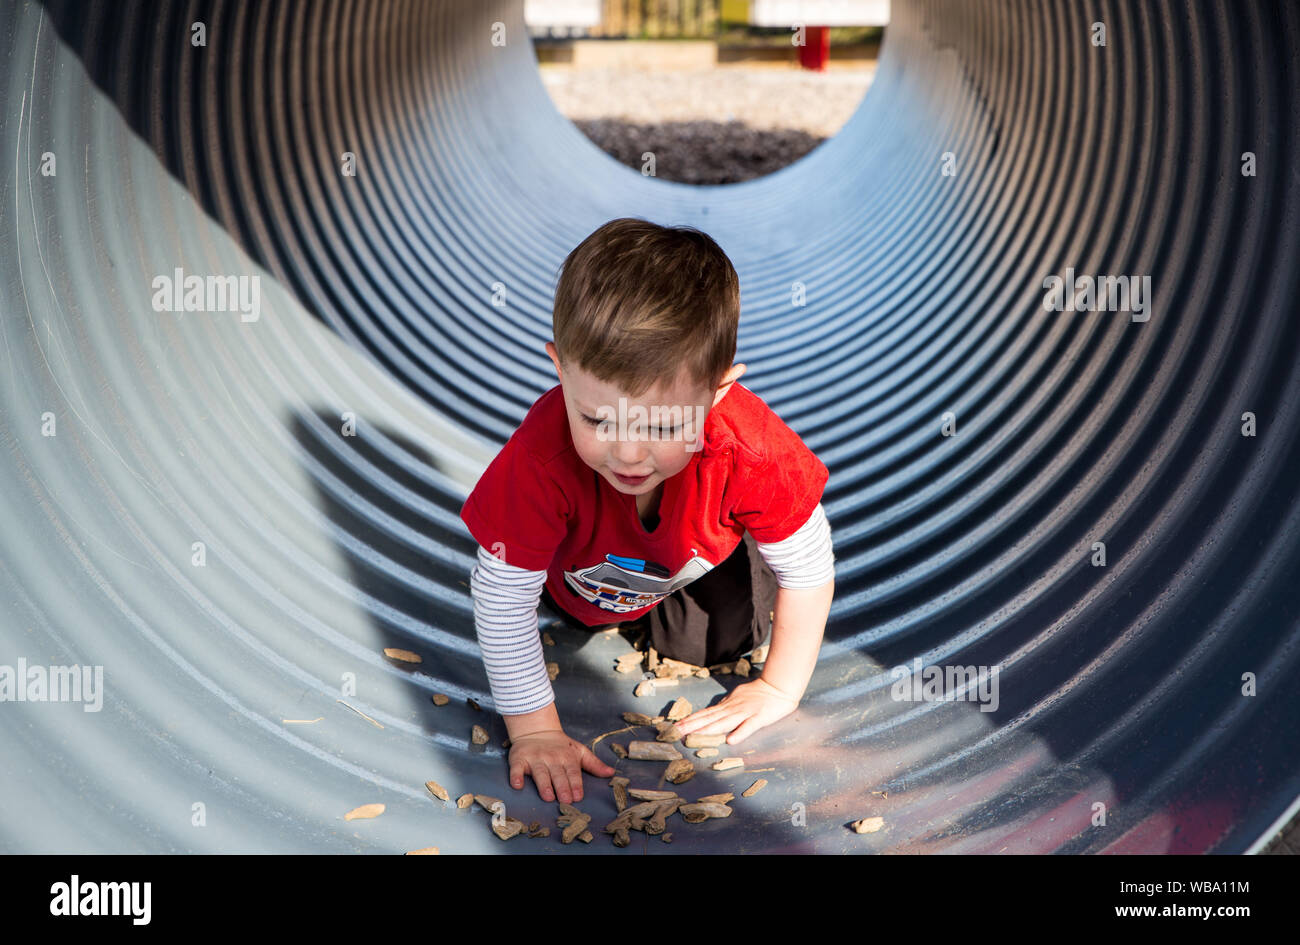 A little boy crawls through a playground tunnel, exploring and having fun Stock Photo